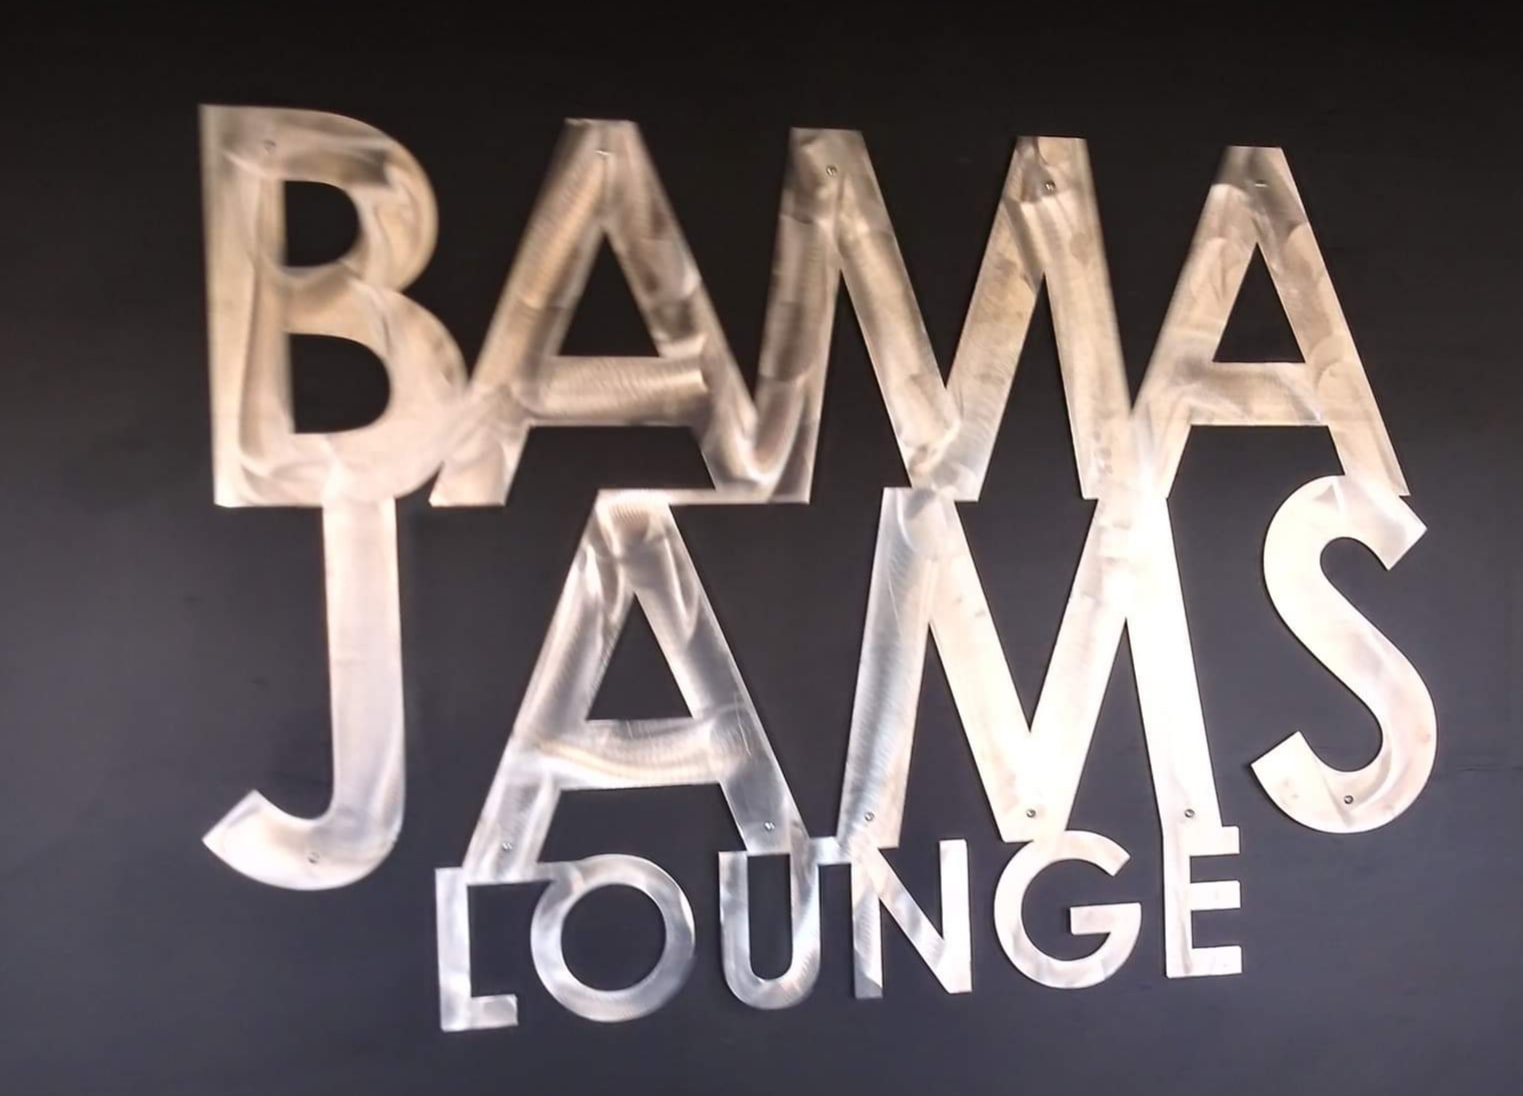 Bama Jams Lounge